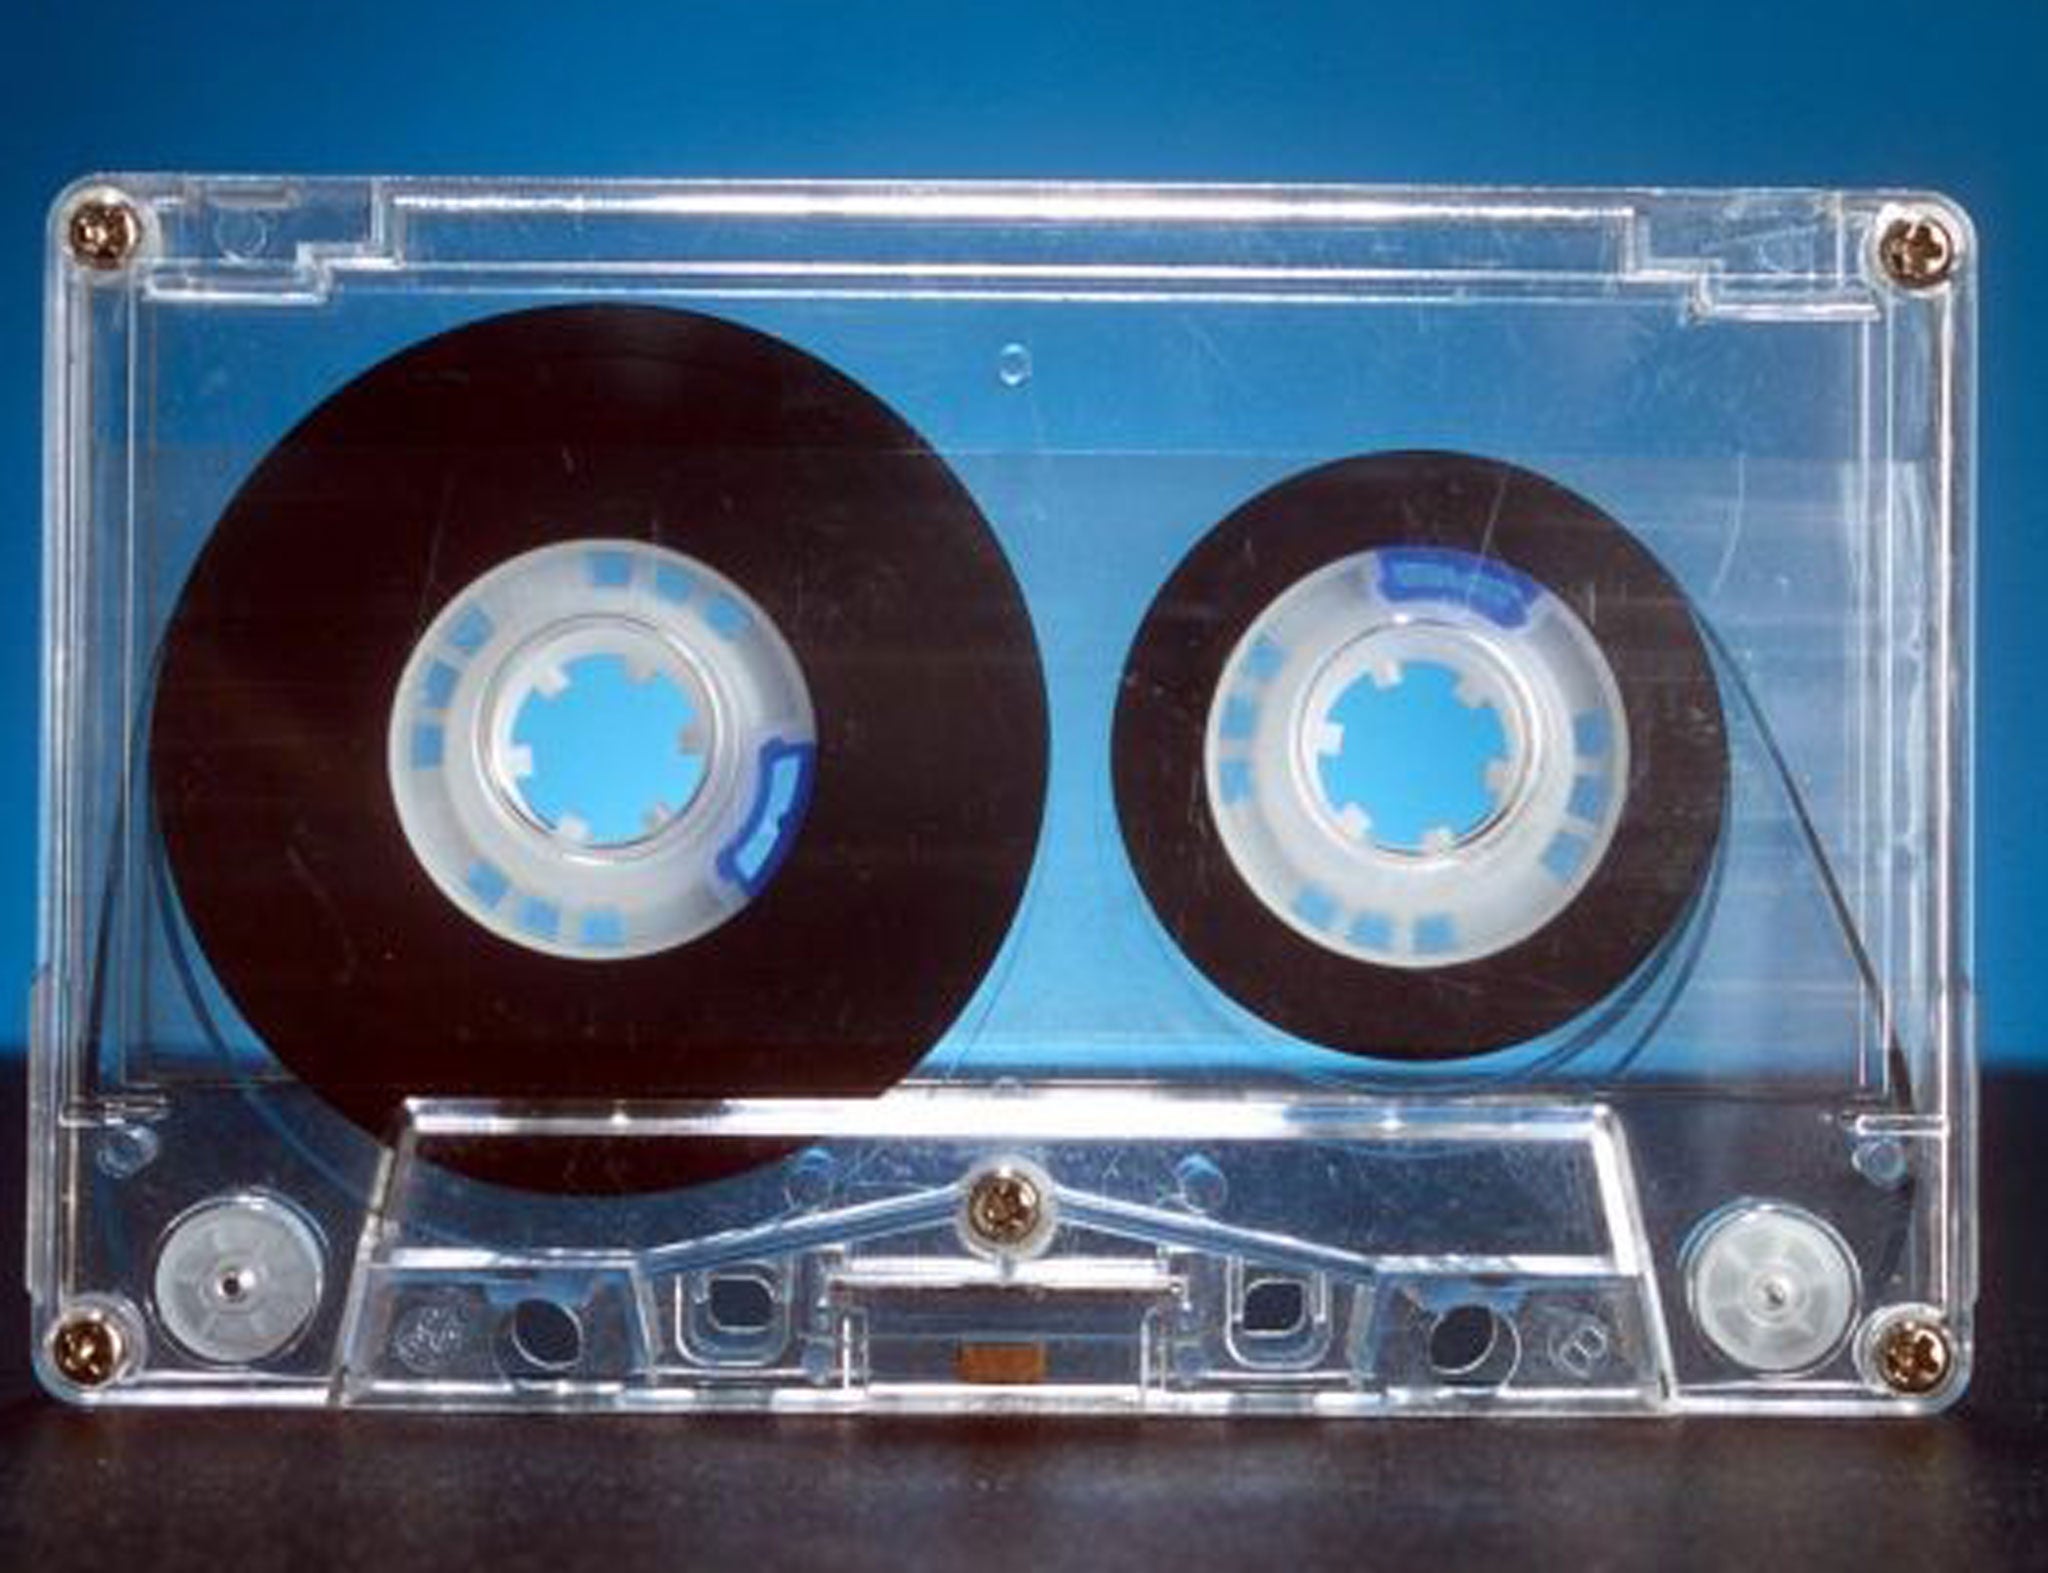 Adieu, Walkman à cassette